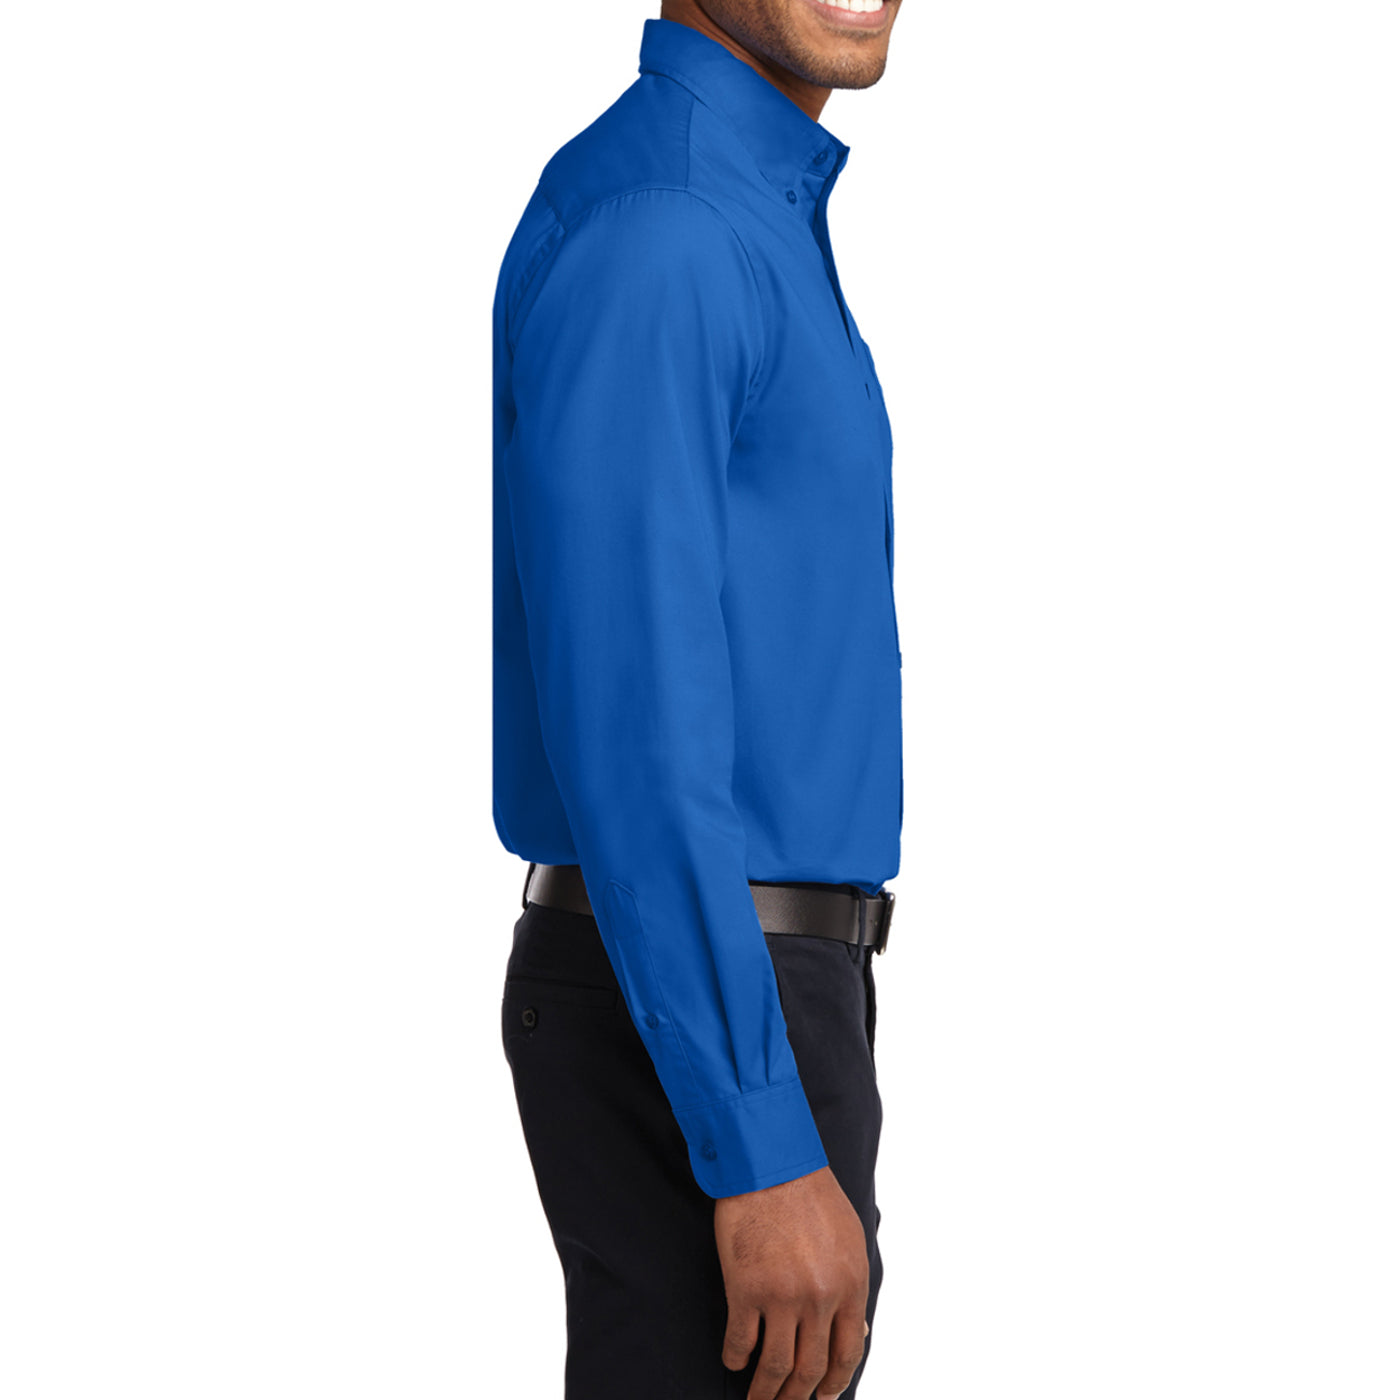 Men's Long Sleeve Easy Care Shirt - Strong Blue - Side